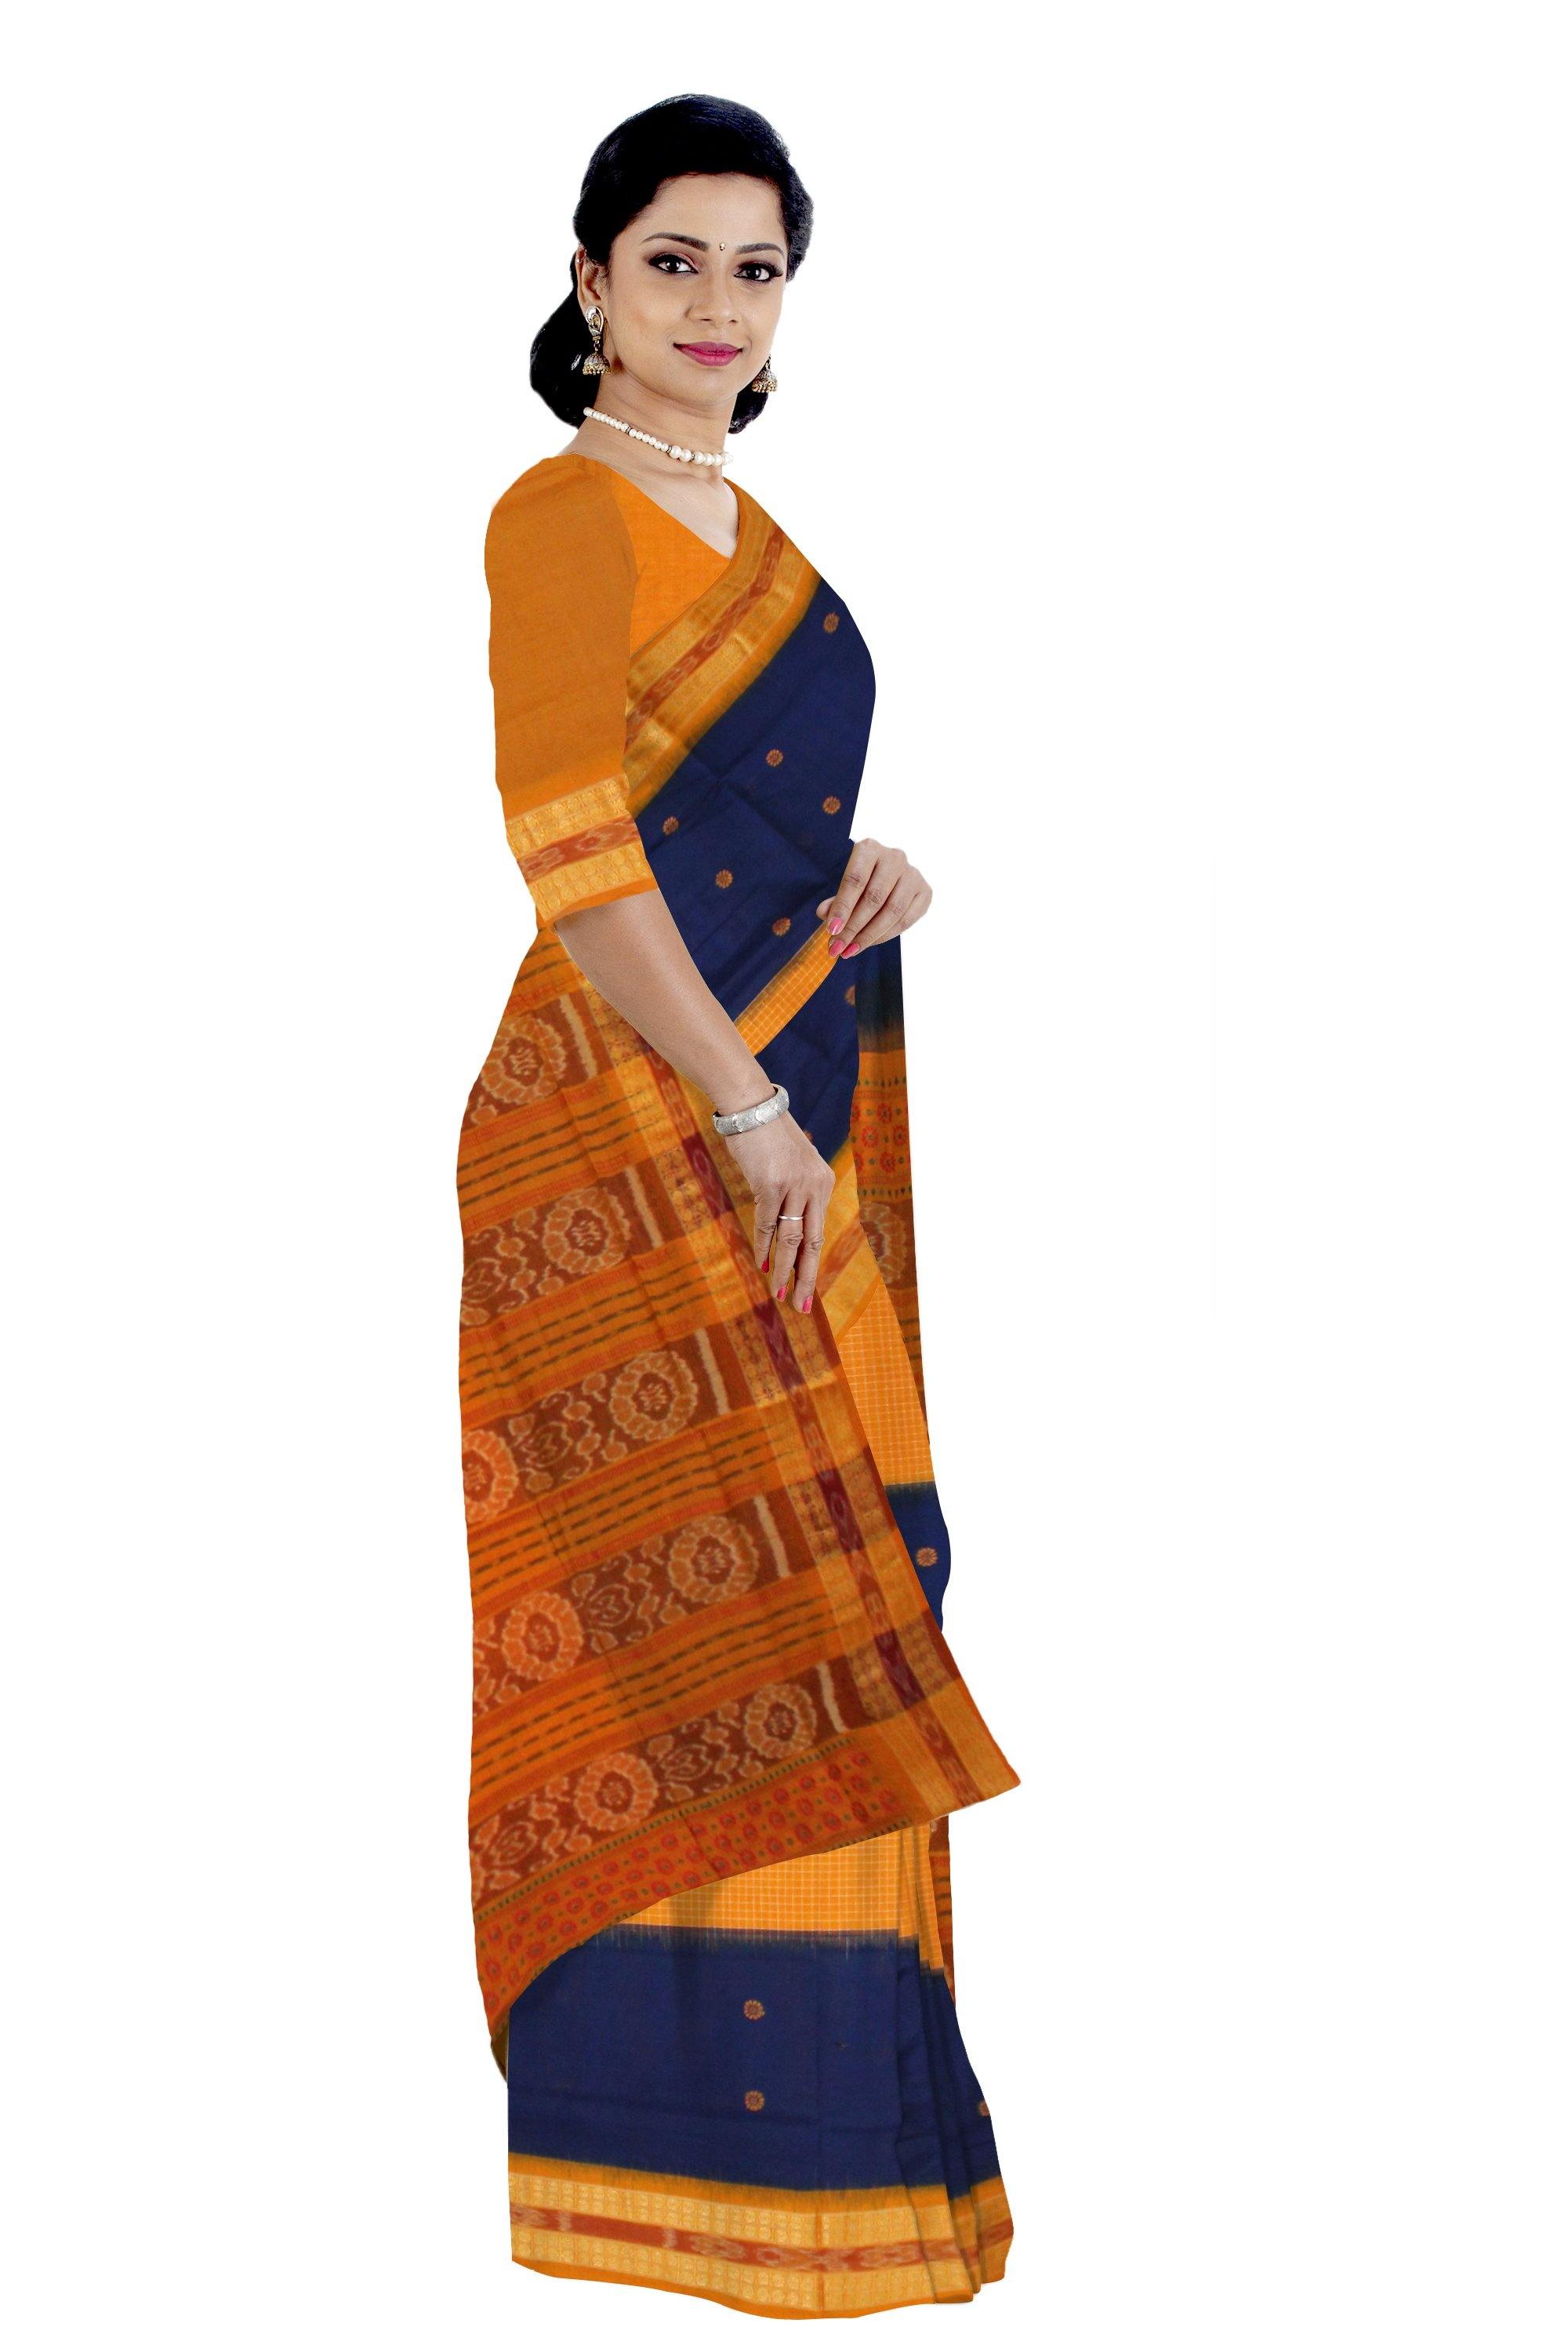 Exclusive Sambalpuri Blue and yellow color Saree With Flower Bomkei With Blouse Piece. - Koshali Arts & Crafts Enterprise